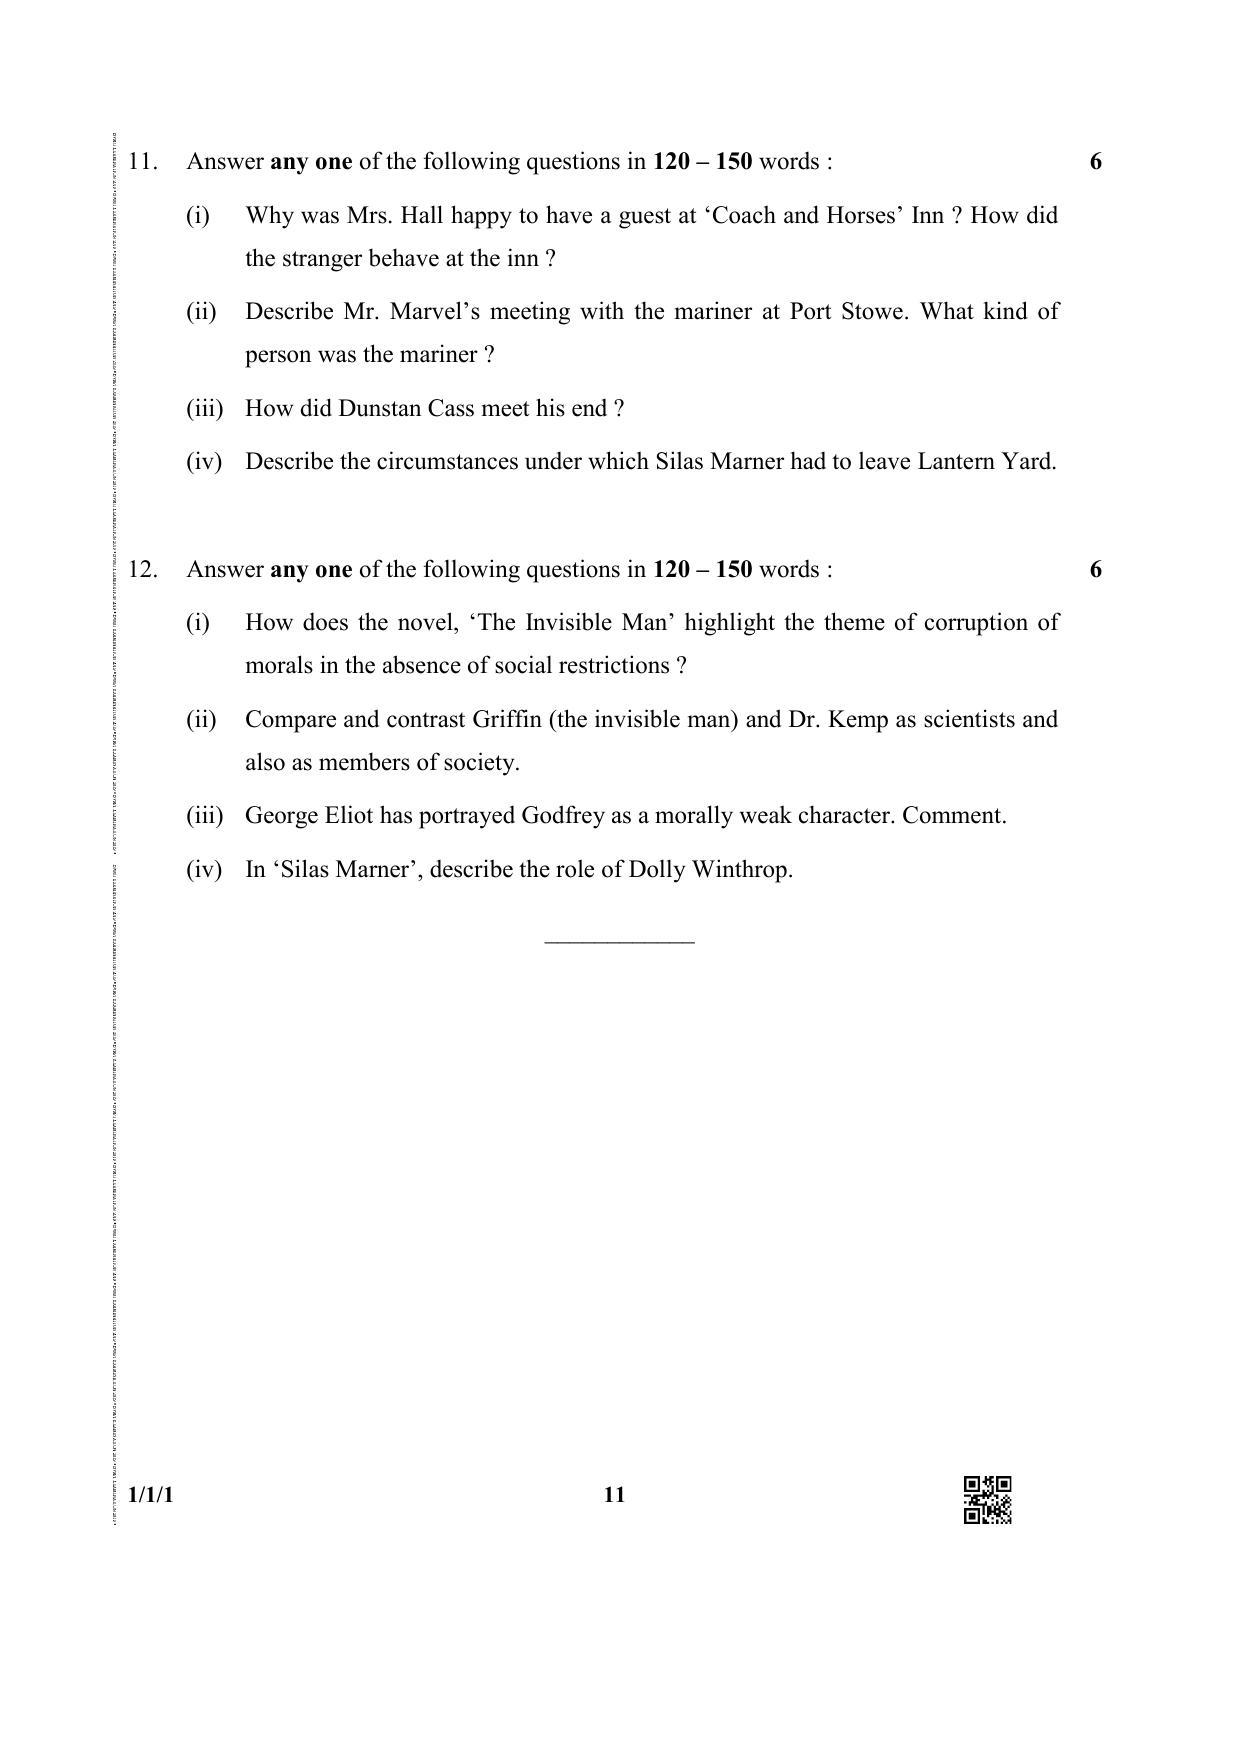 CBSE Class 12 1-1-1 (English Core) 2019 Question Paper - Page 11